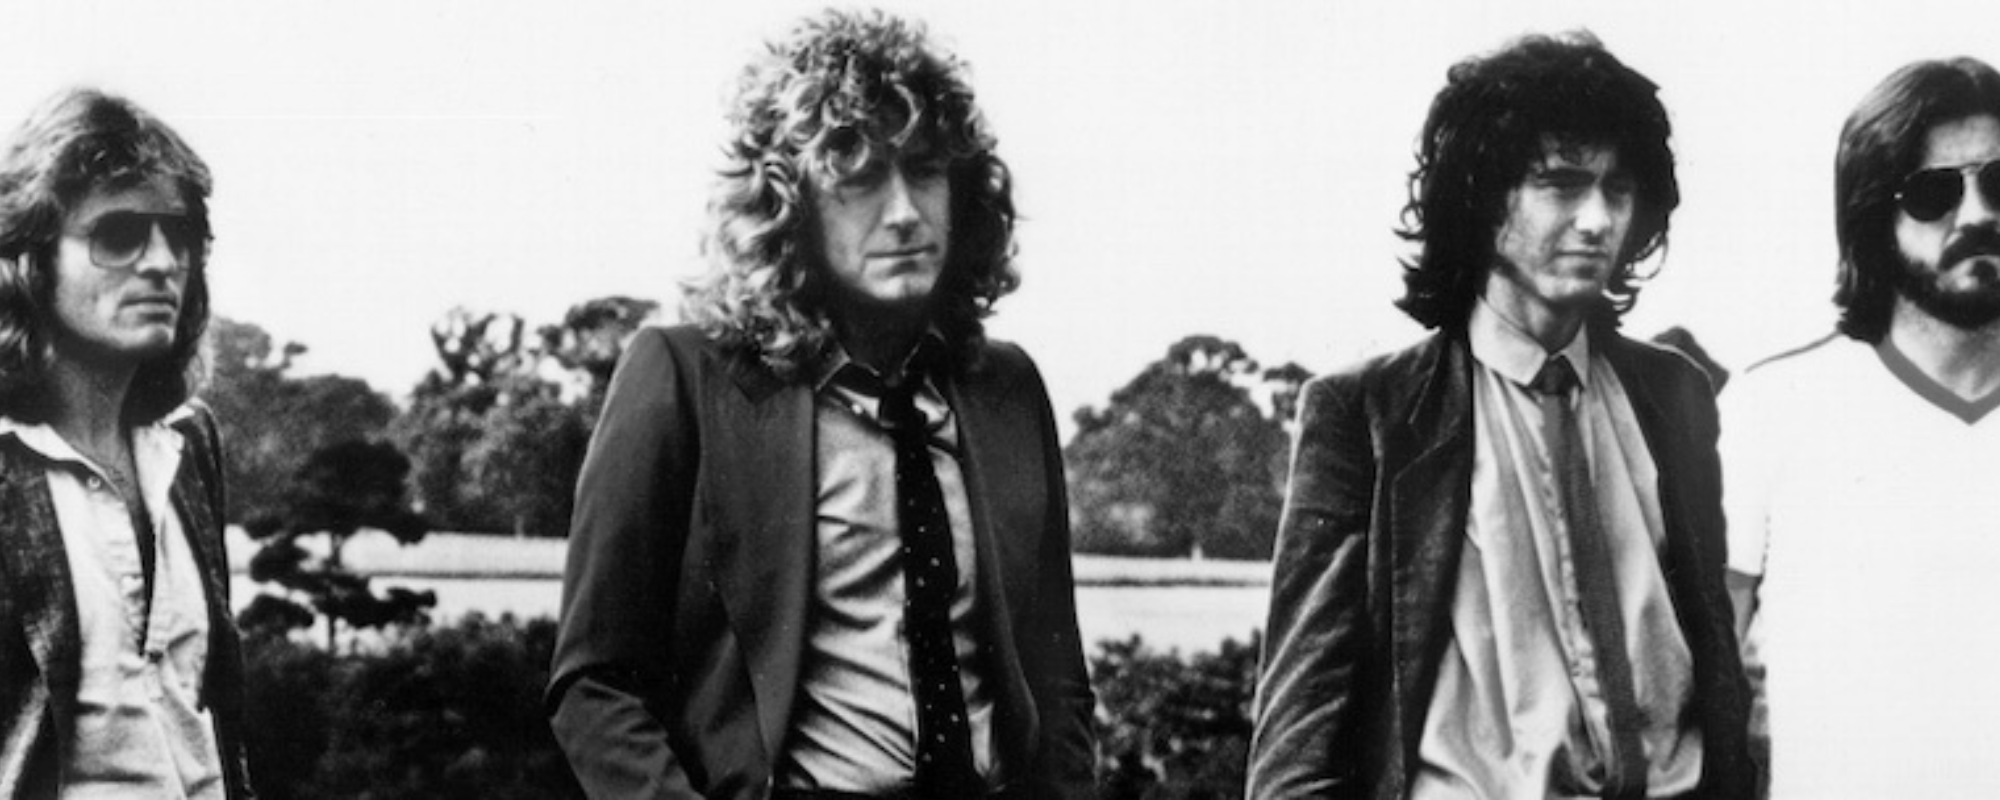 Why Did Led Zeppelin Break Up?